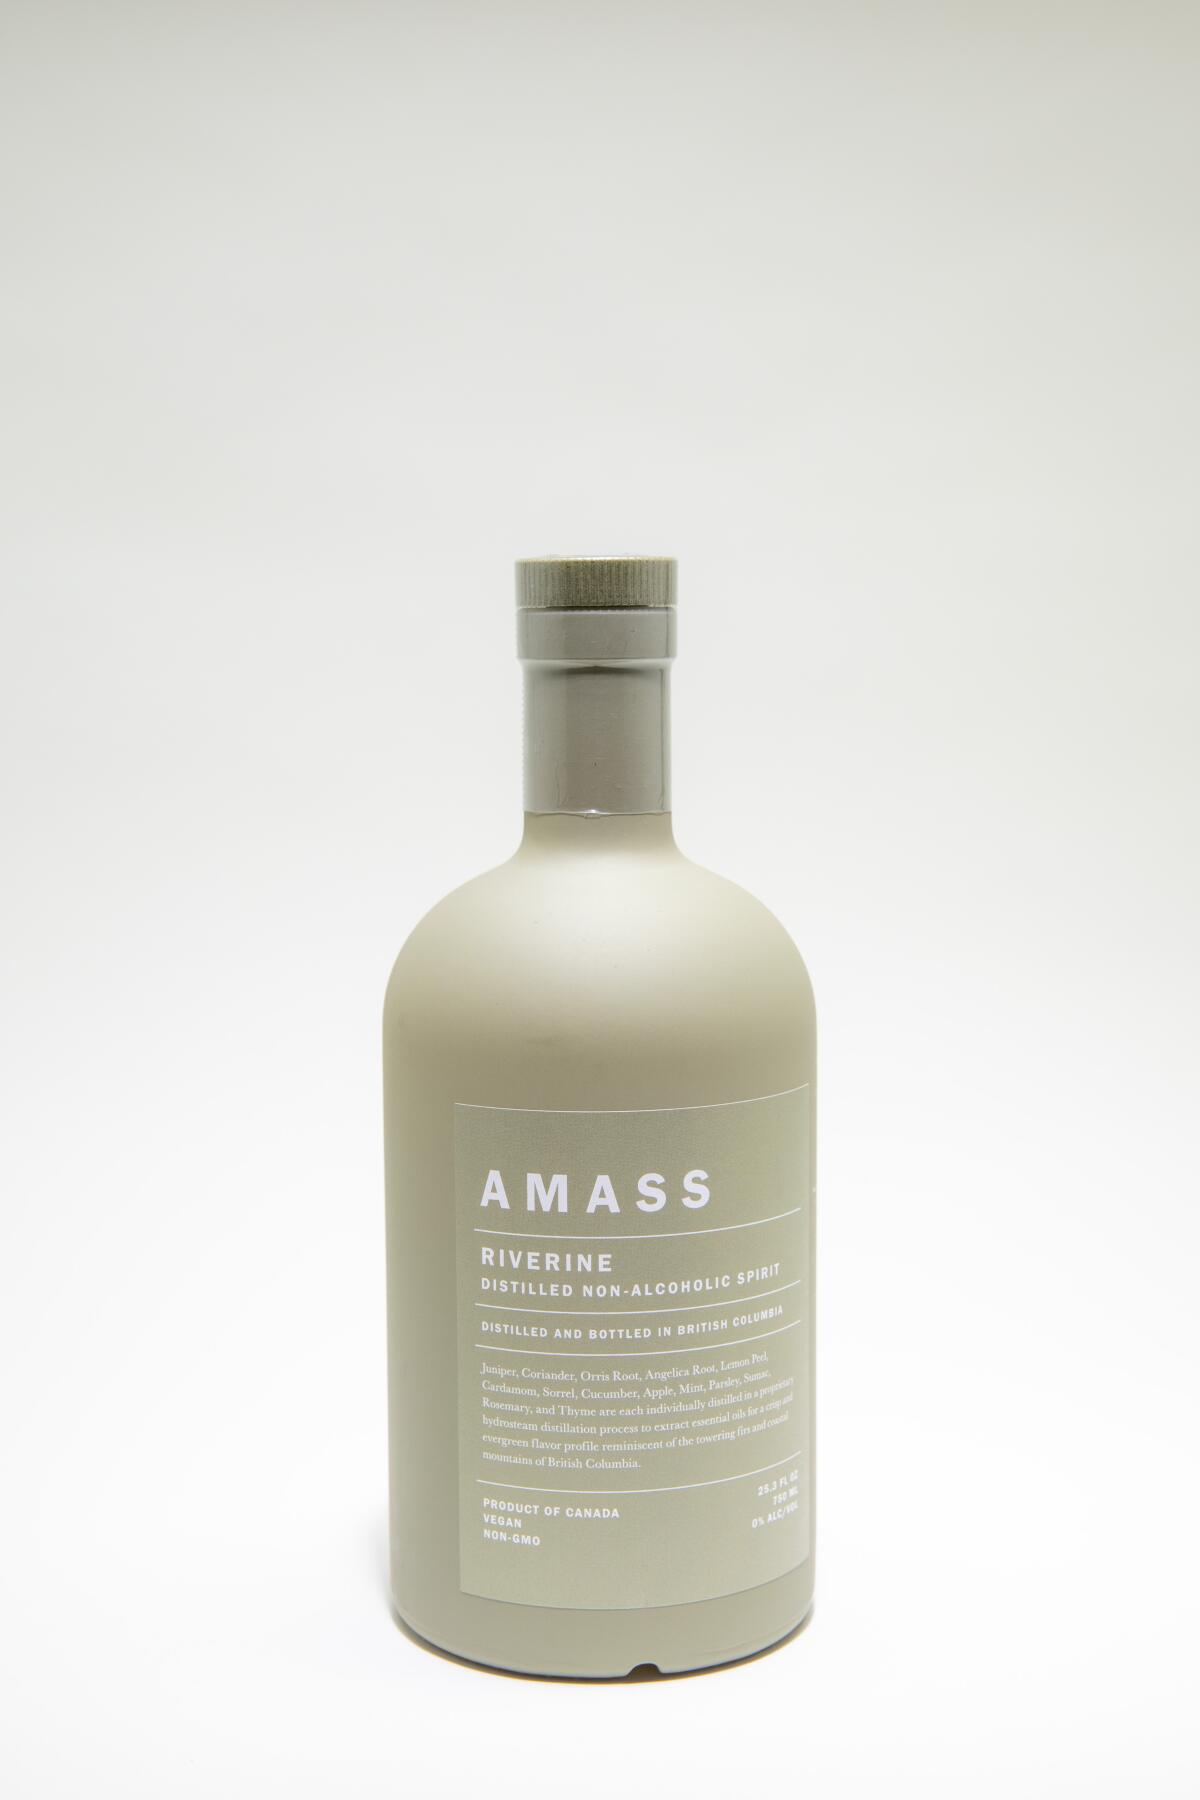 AMASS Riverine nonalcoholic spirit.